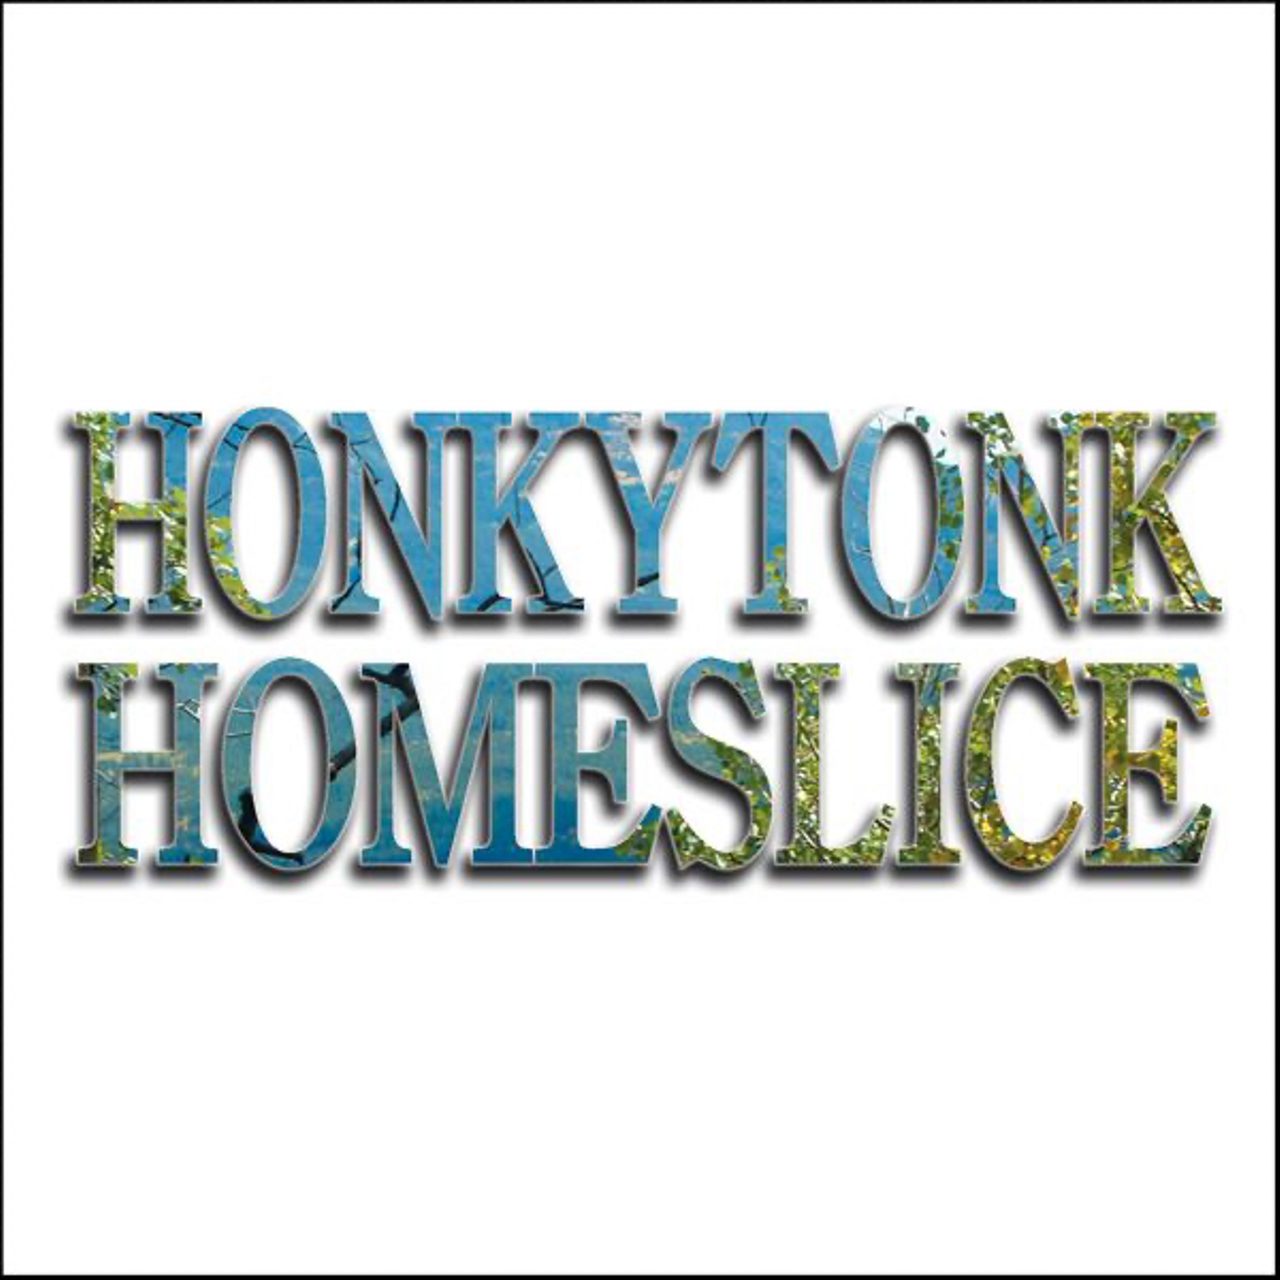 Honkytonk Homeslice - Honkytonk Homeslice cover album